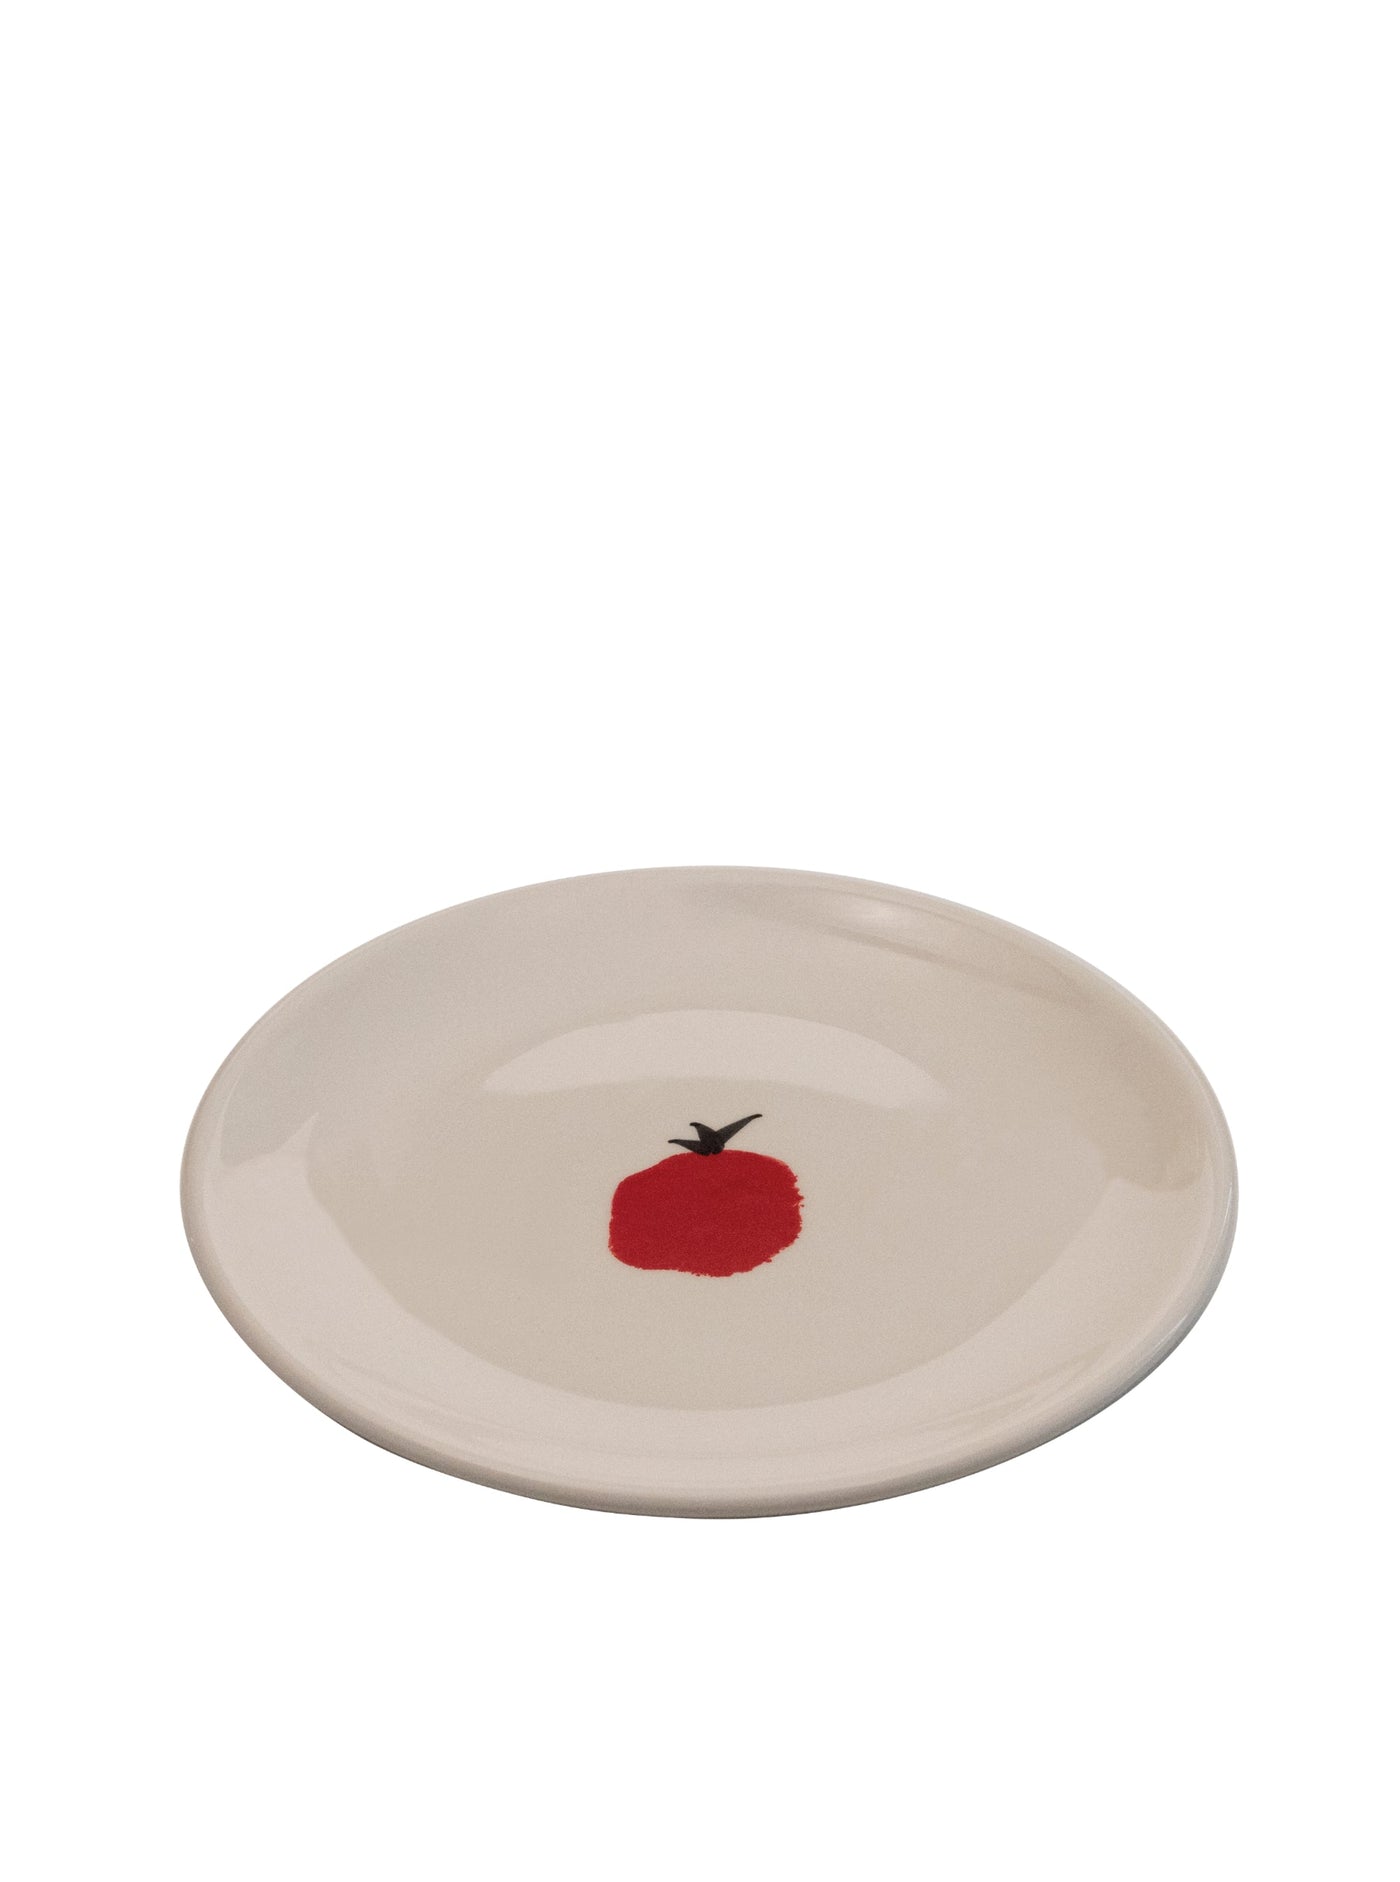 Tomato Dessert Plate